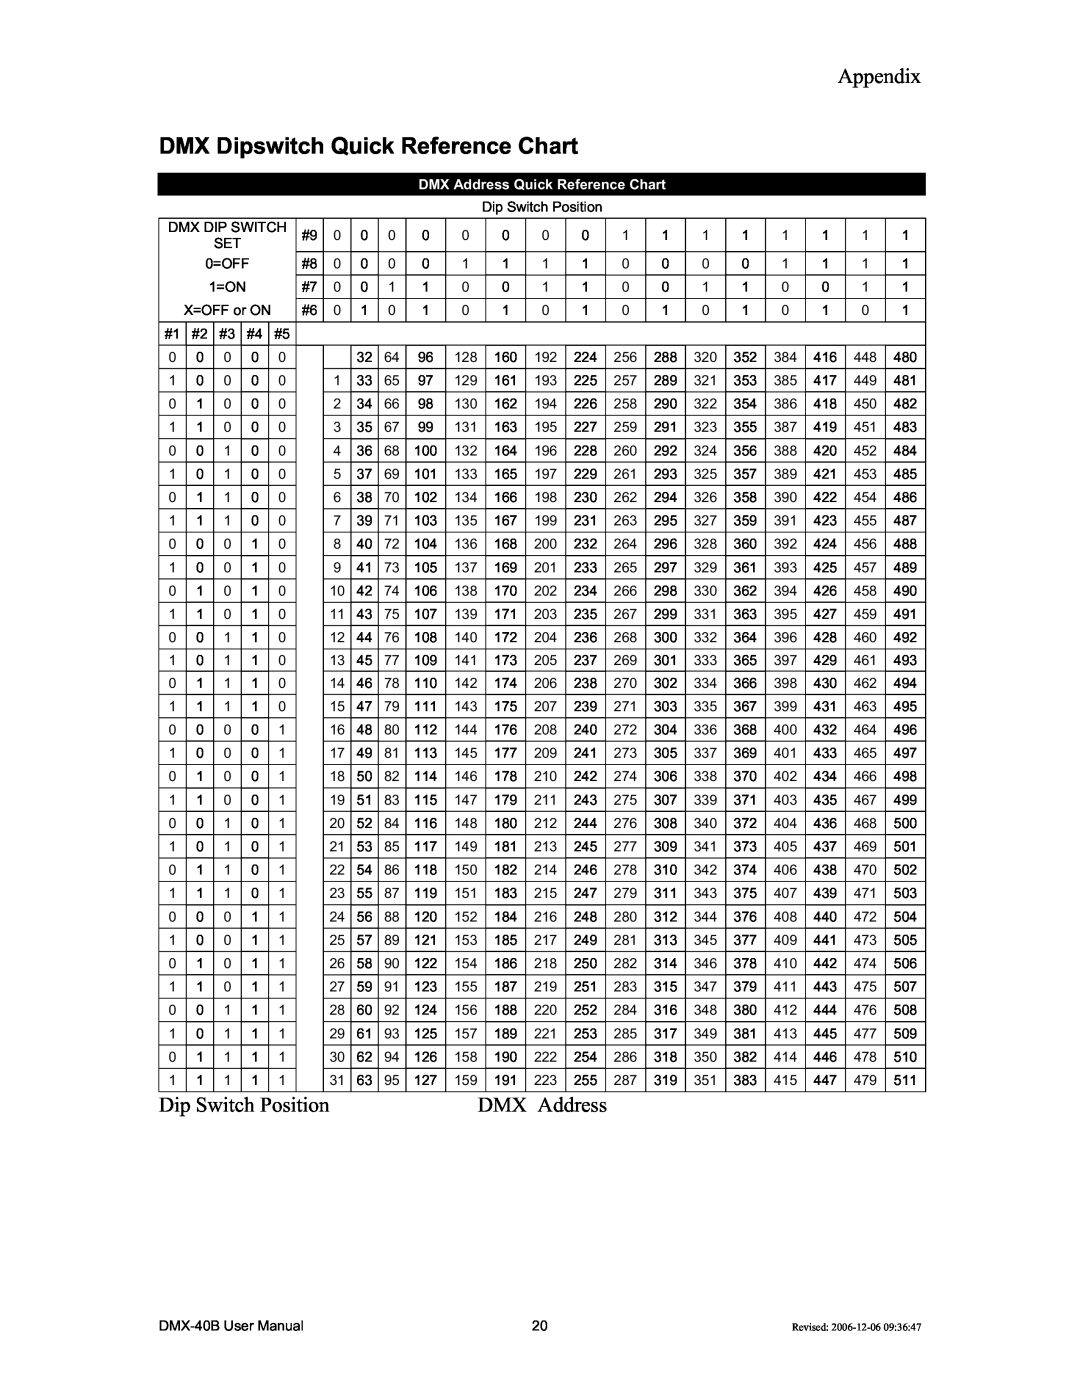 Chauvet DMX-40B user manual DMX Dipswitch Quick Reference Chart, Dip Switch Position, DMX Address, Appendix 